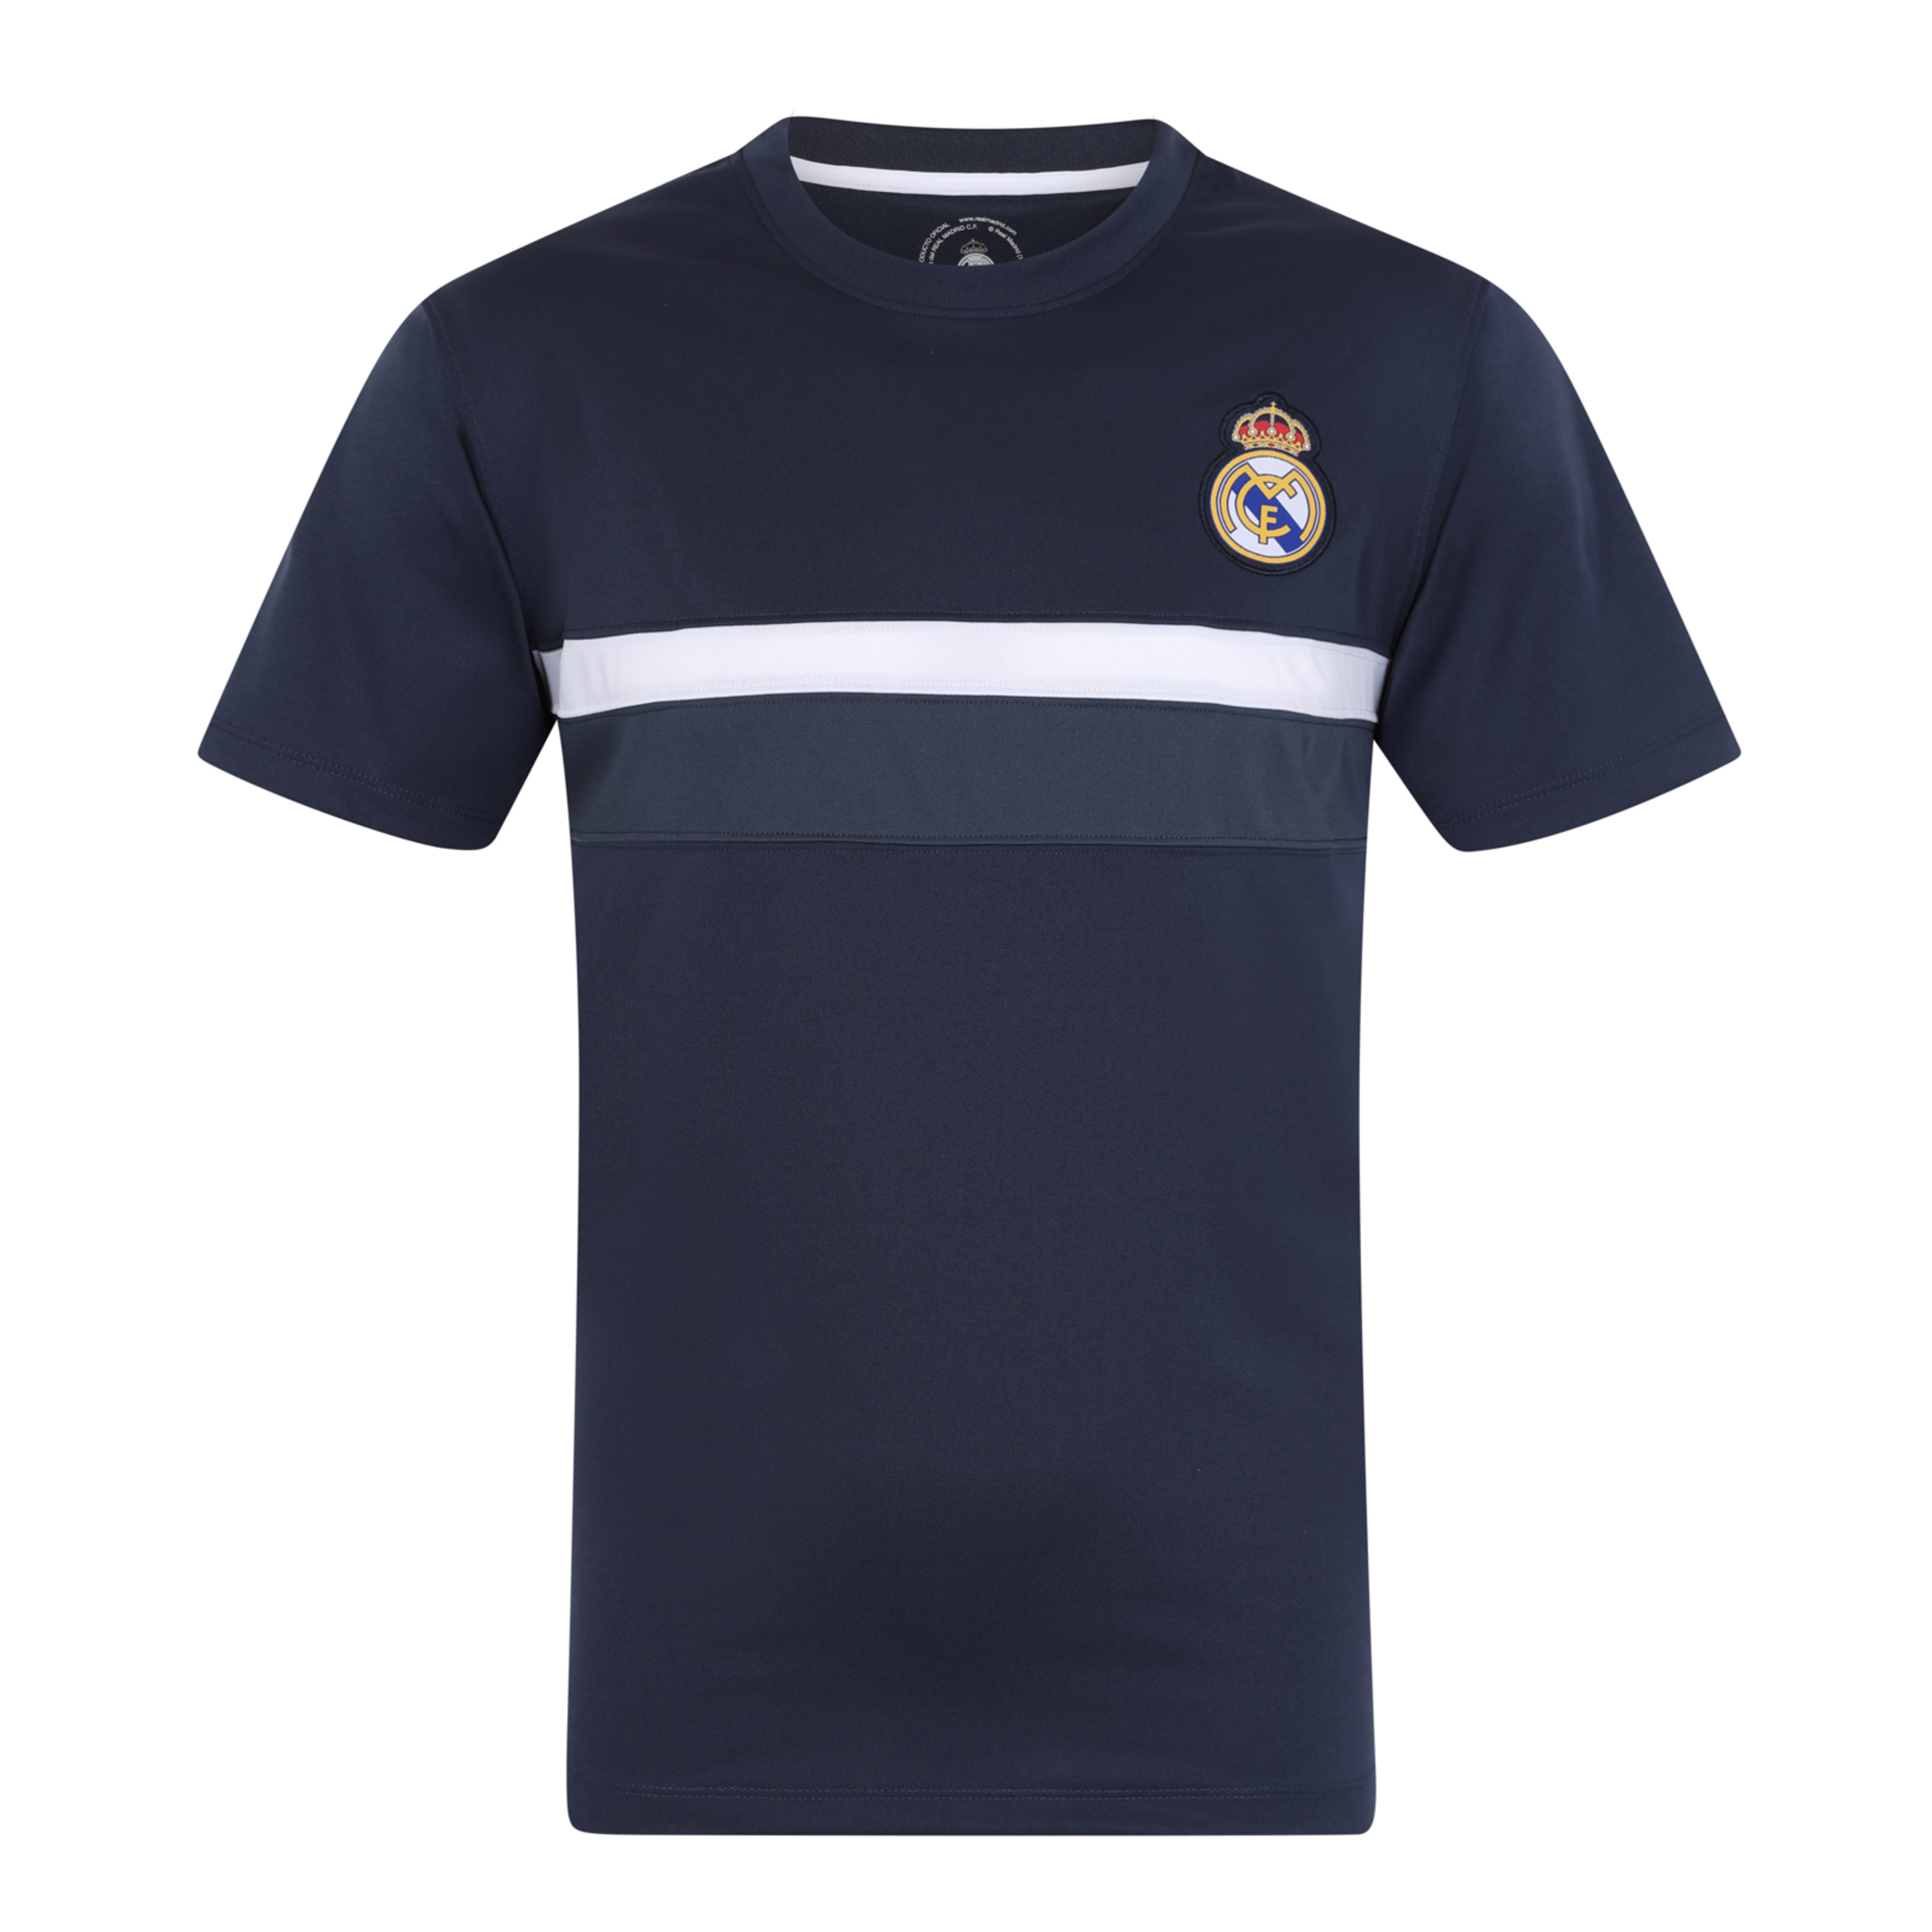 Real Madrid - Camiseta Oficial Para Entrenamiento - Hombre - Poliéster - Blanco - Franja Roja - Xxl